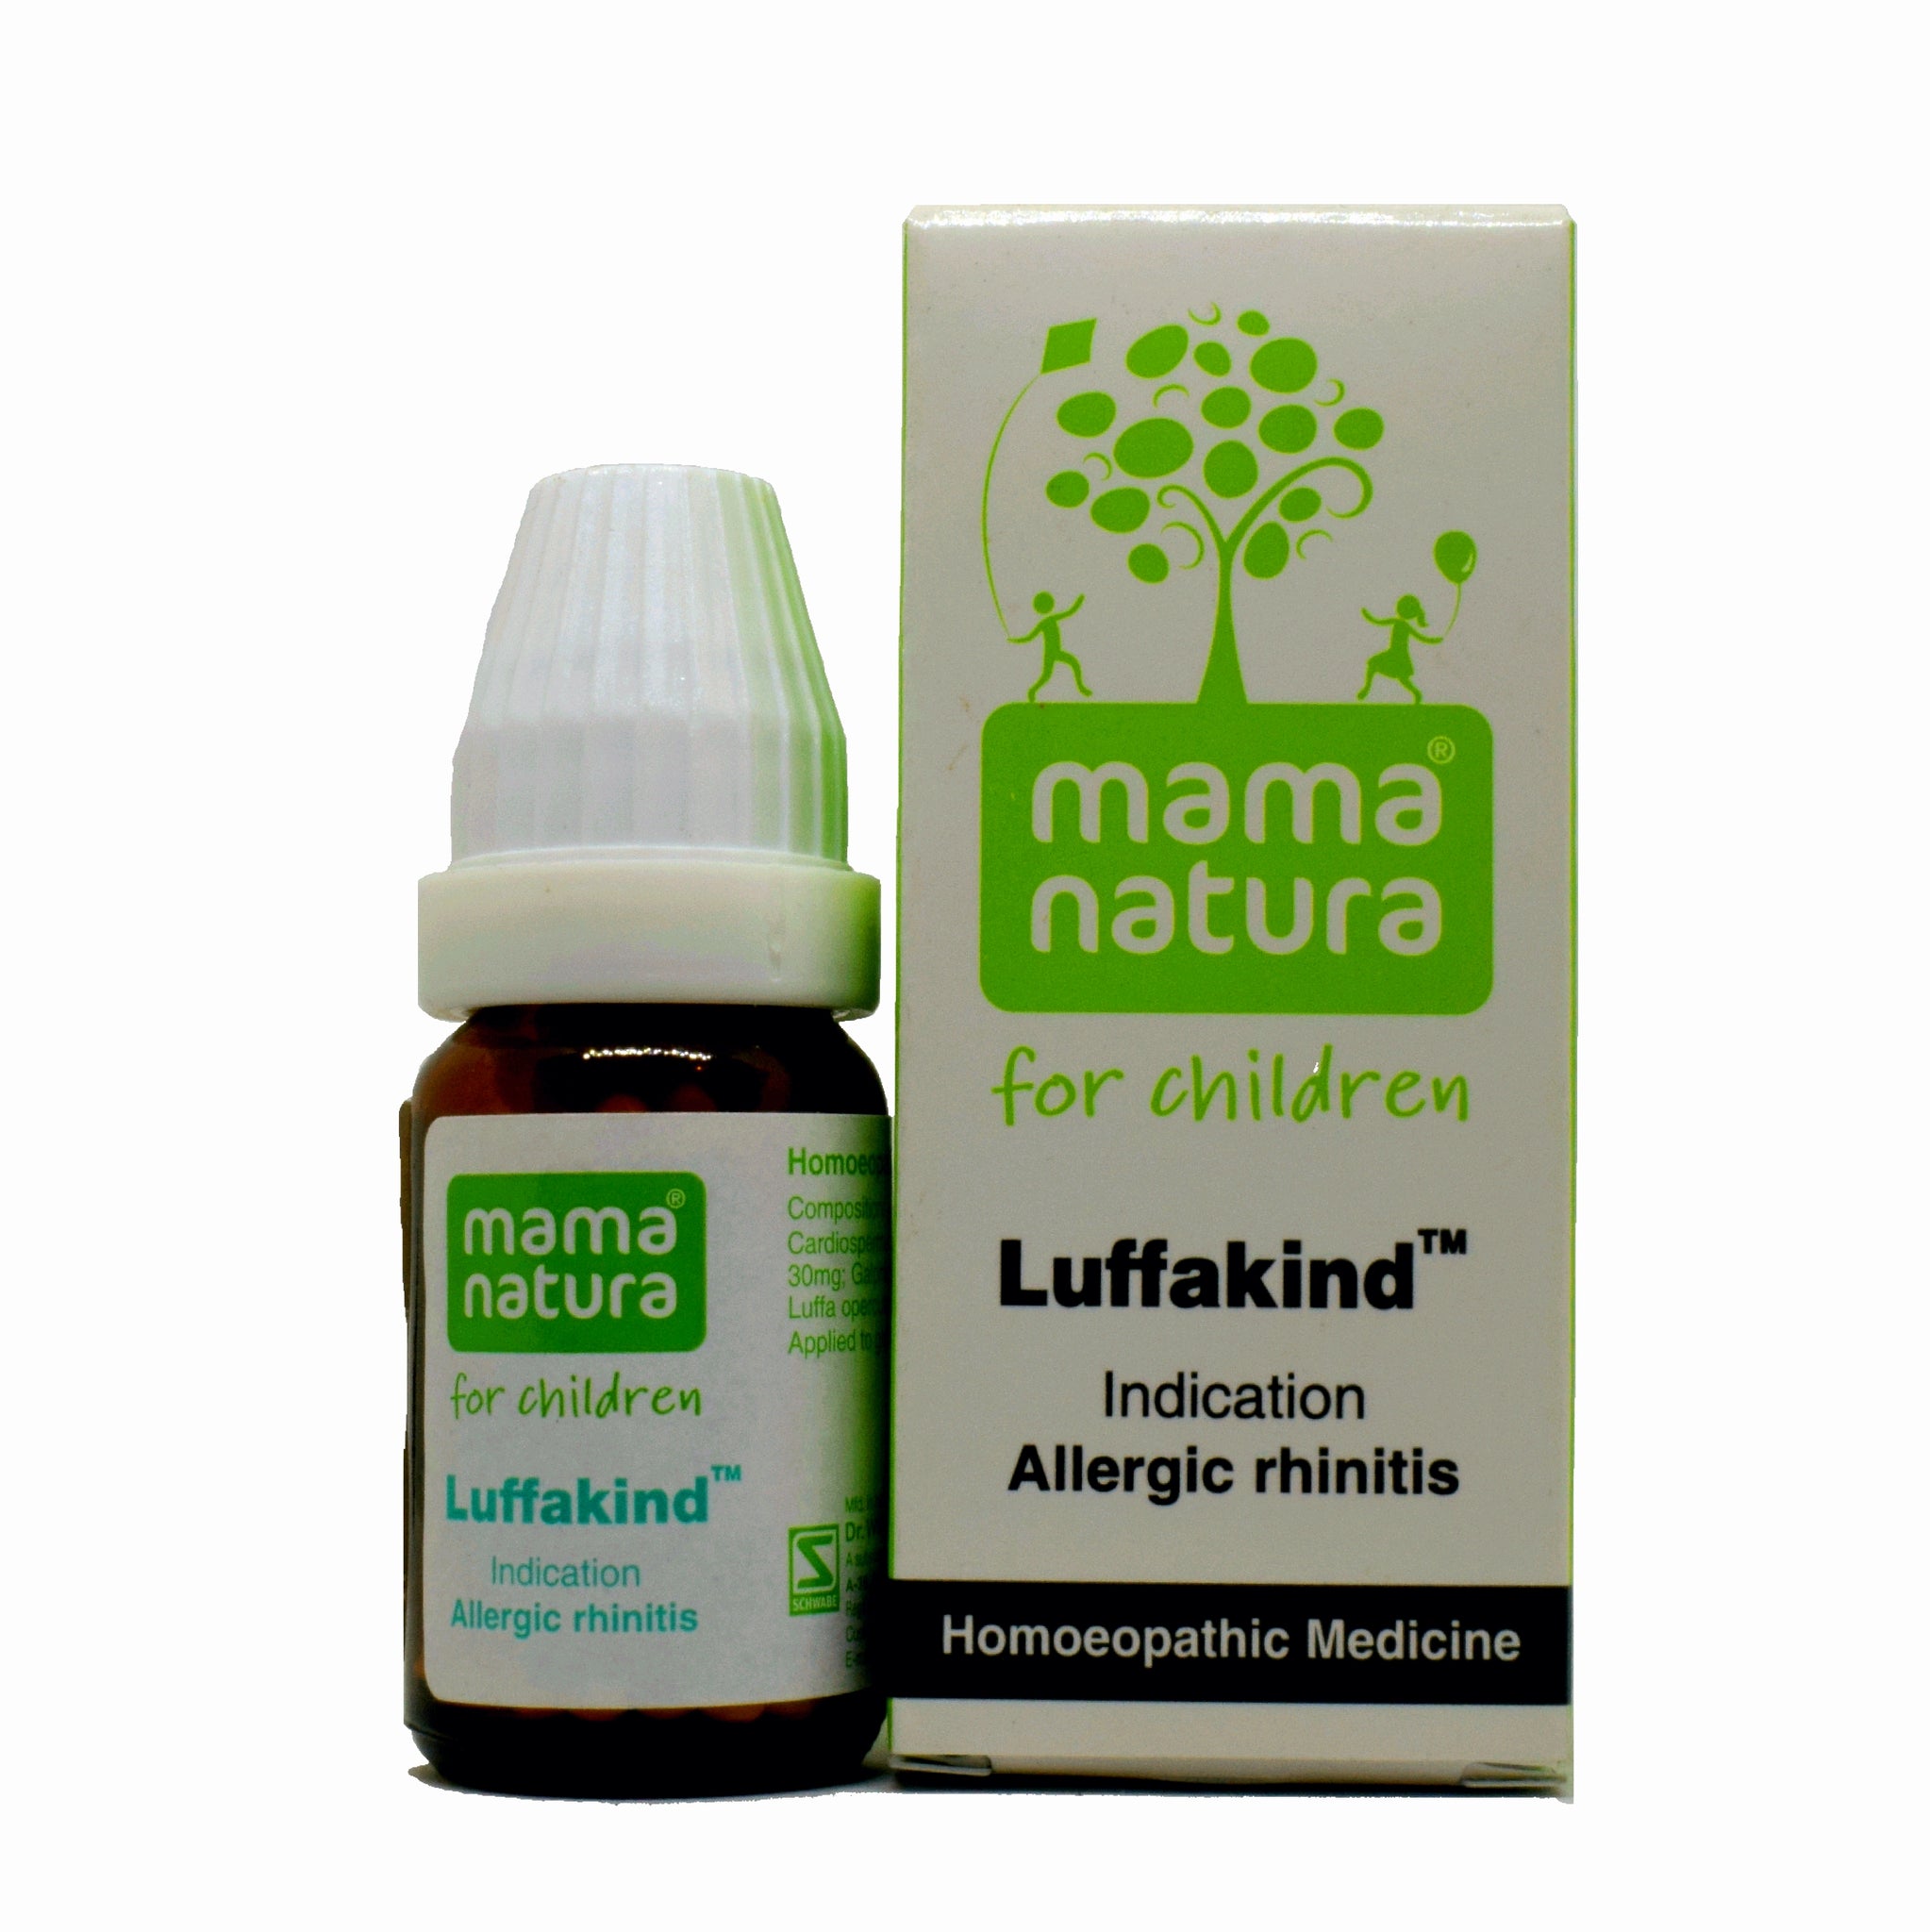 Luffakind mama natura Buy Online | Order Schwabe medicines online